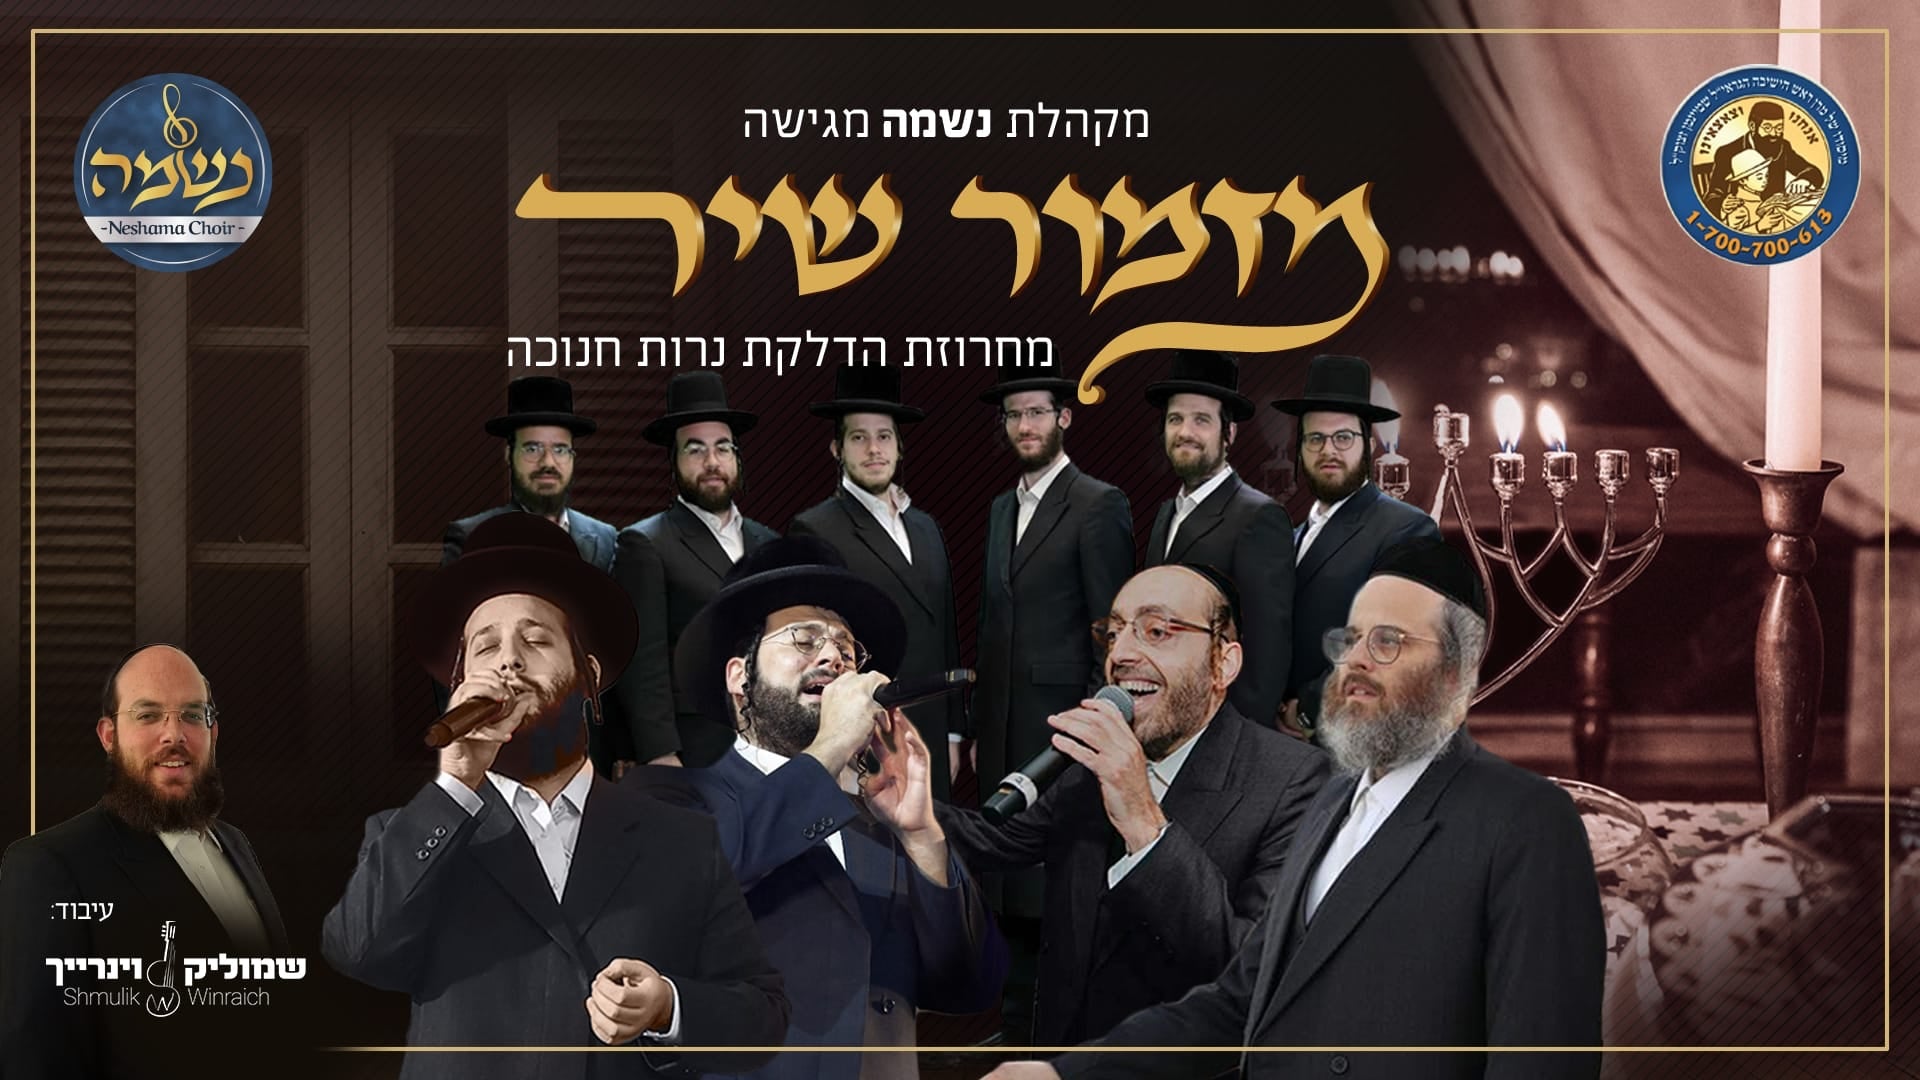 Neshama Choir Ft. Dudi Kalish, Ahrele Samet, Motty Vizel, Moshe Dovid Weissmandl & Shmulik Weinreich Productions - Mizmor Shir (Single)